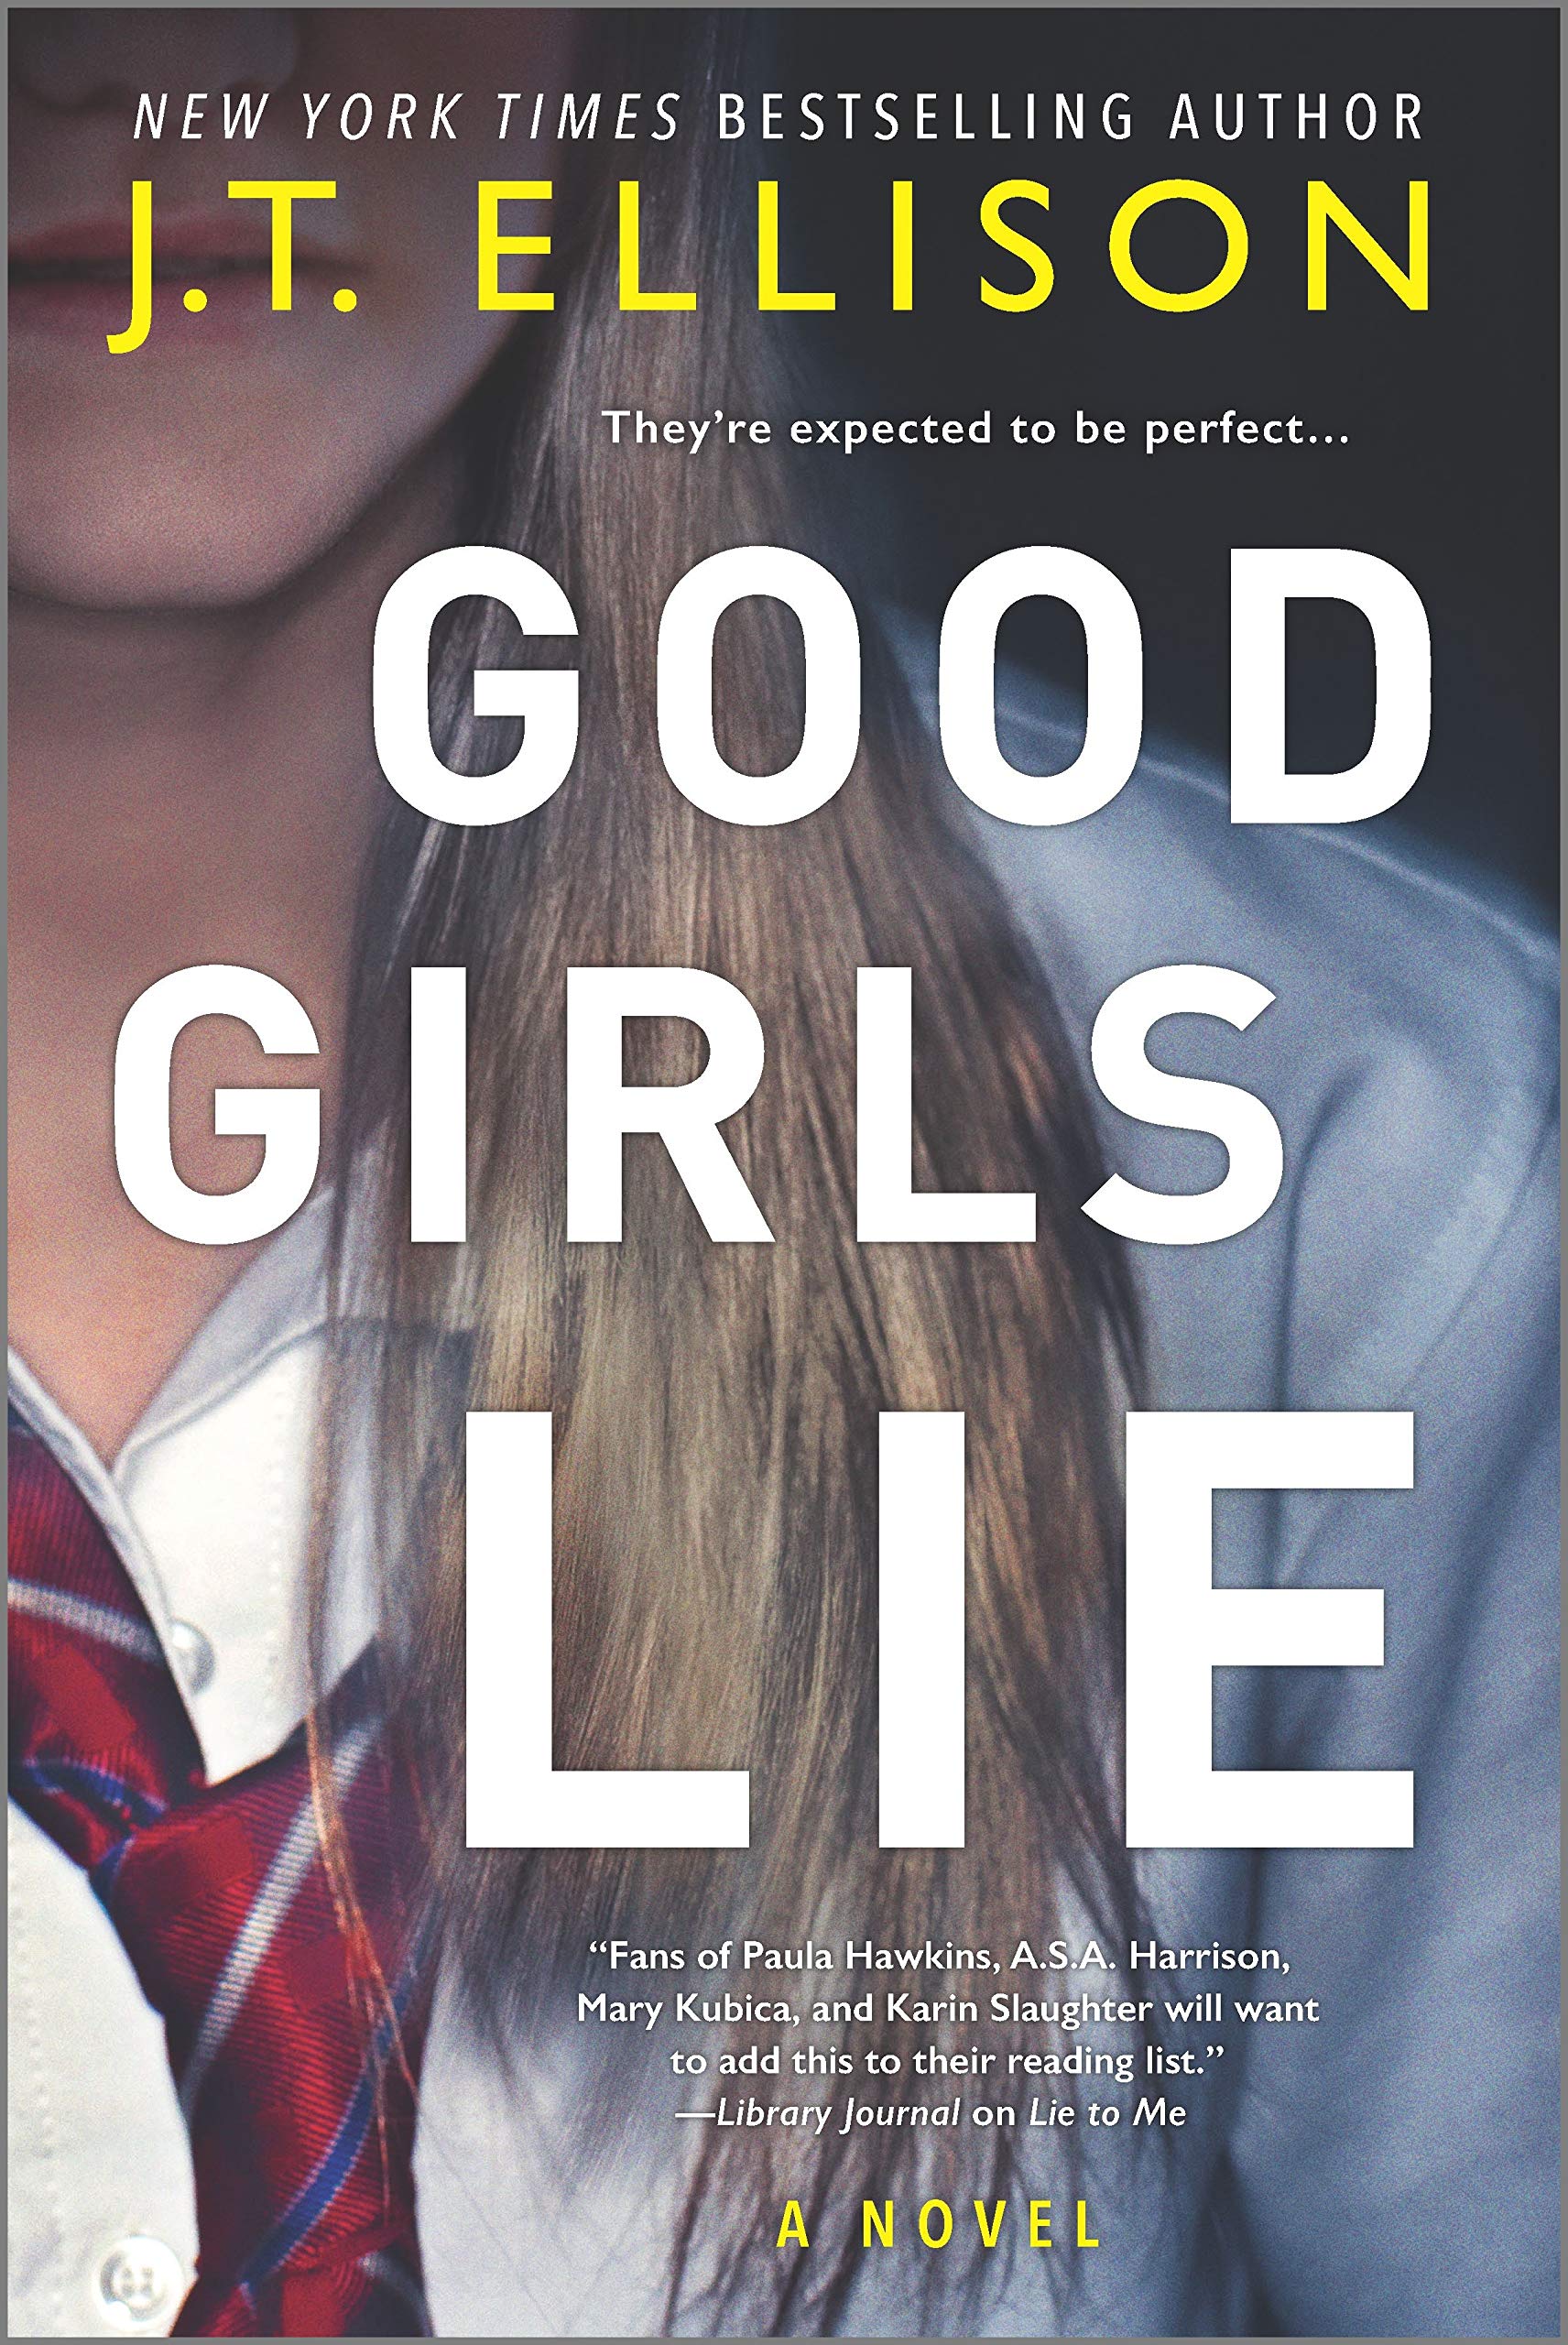 Image for "Good Girls Lie"